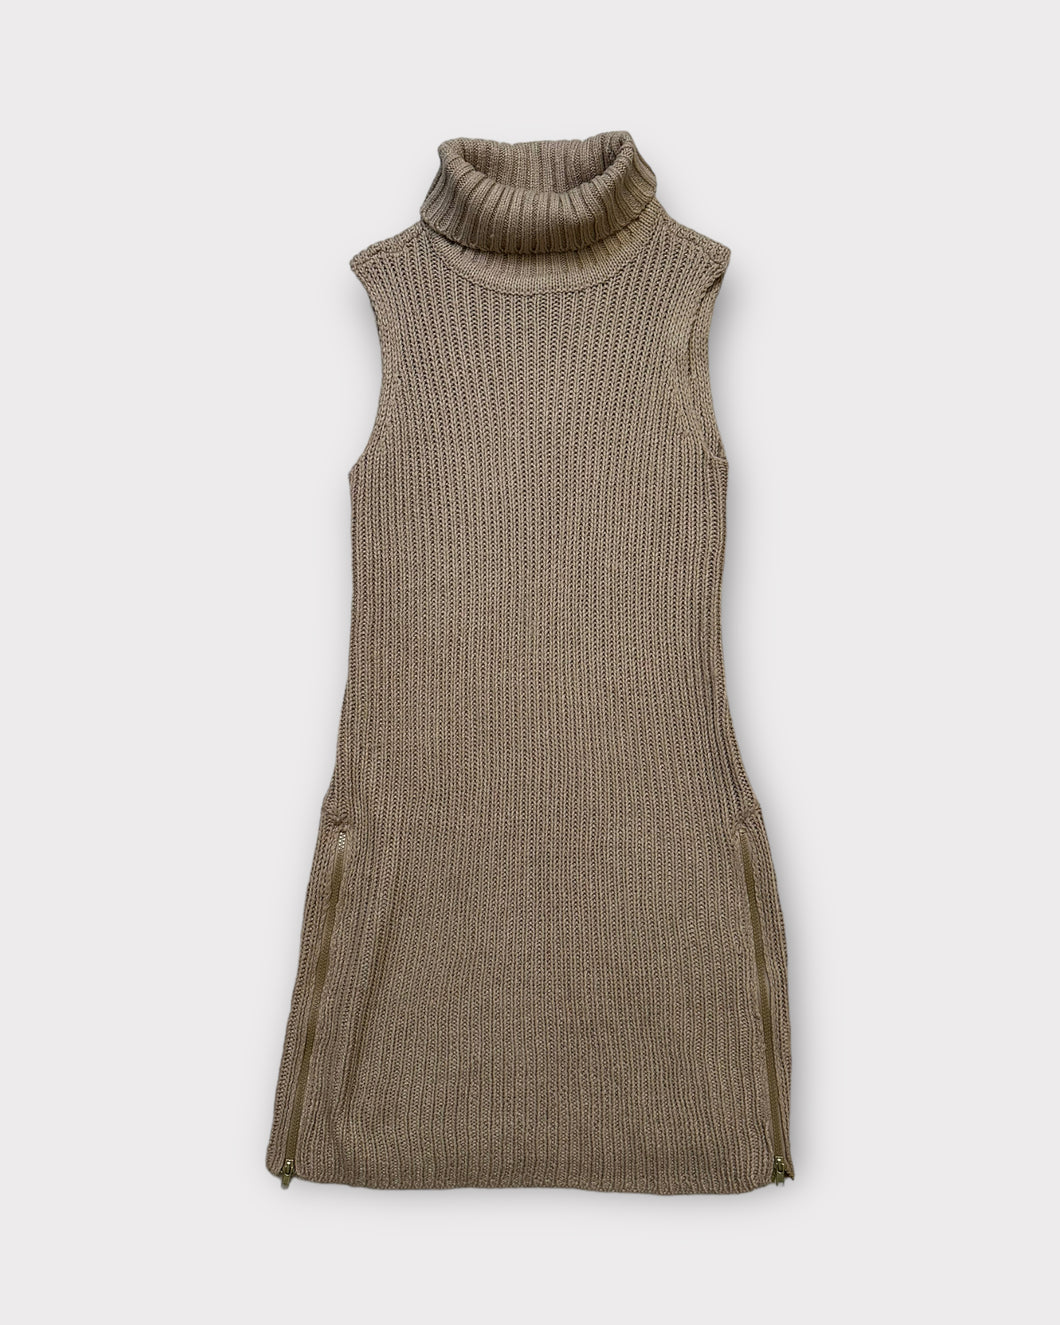 Derek Heart Cider Brown Knit Turtlneck Sweater Dress (L)